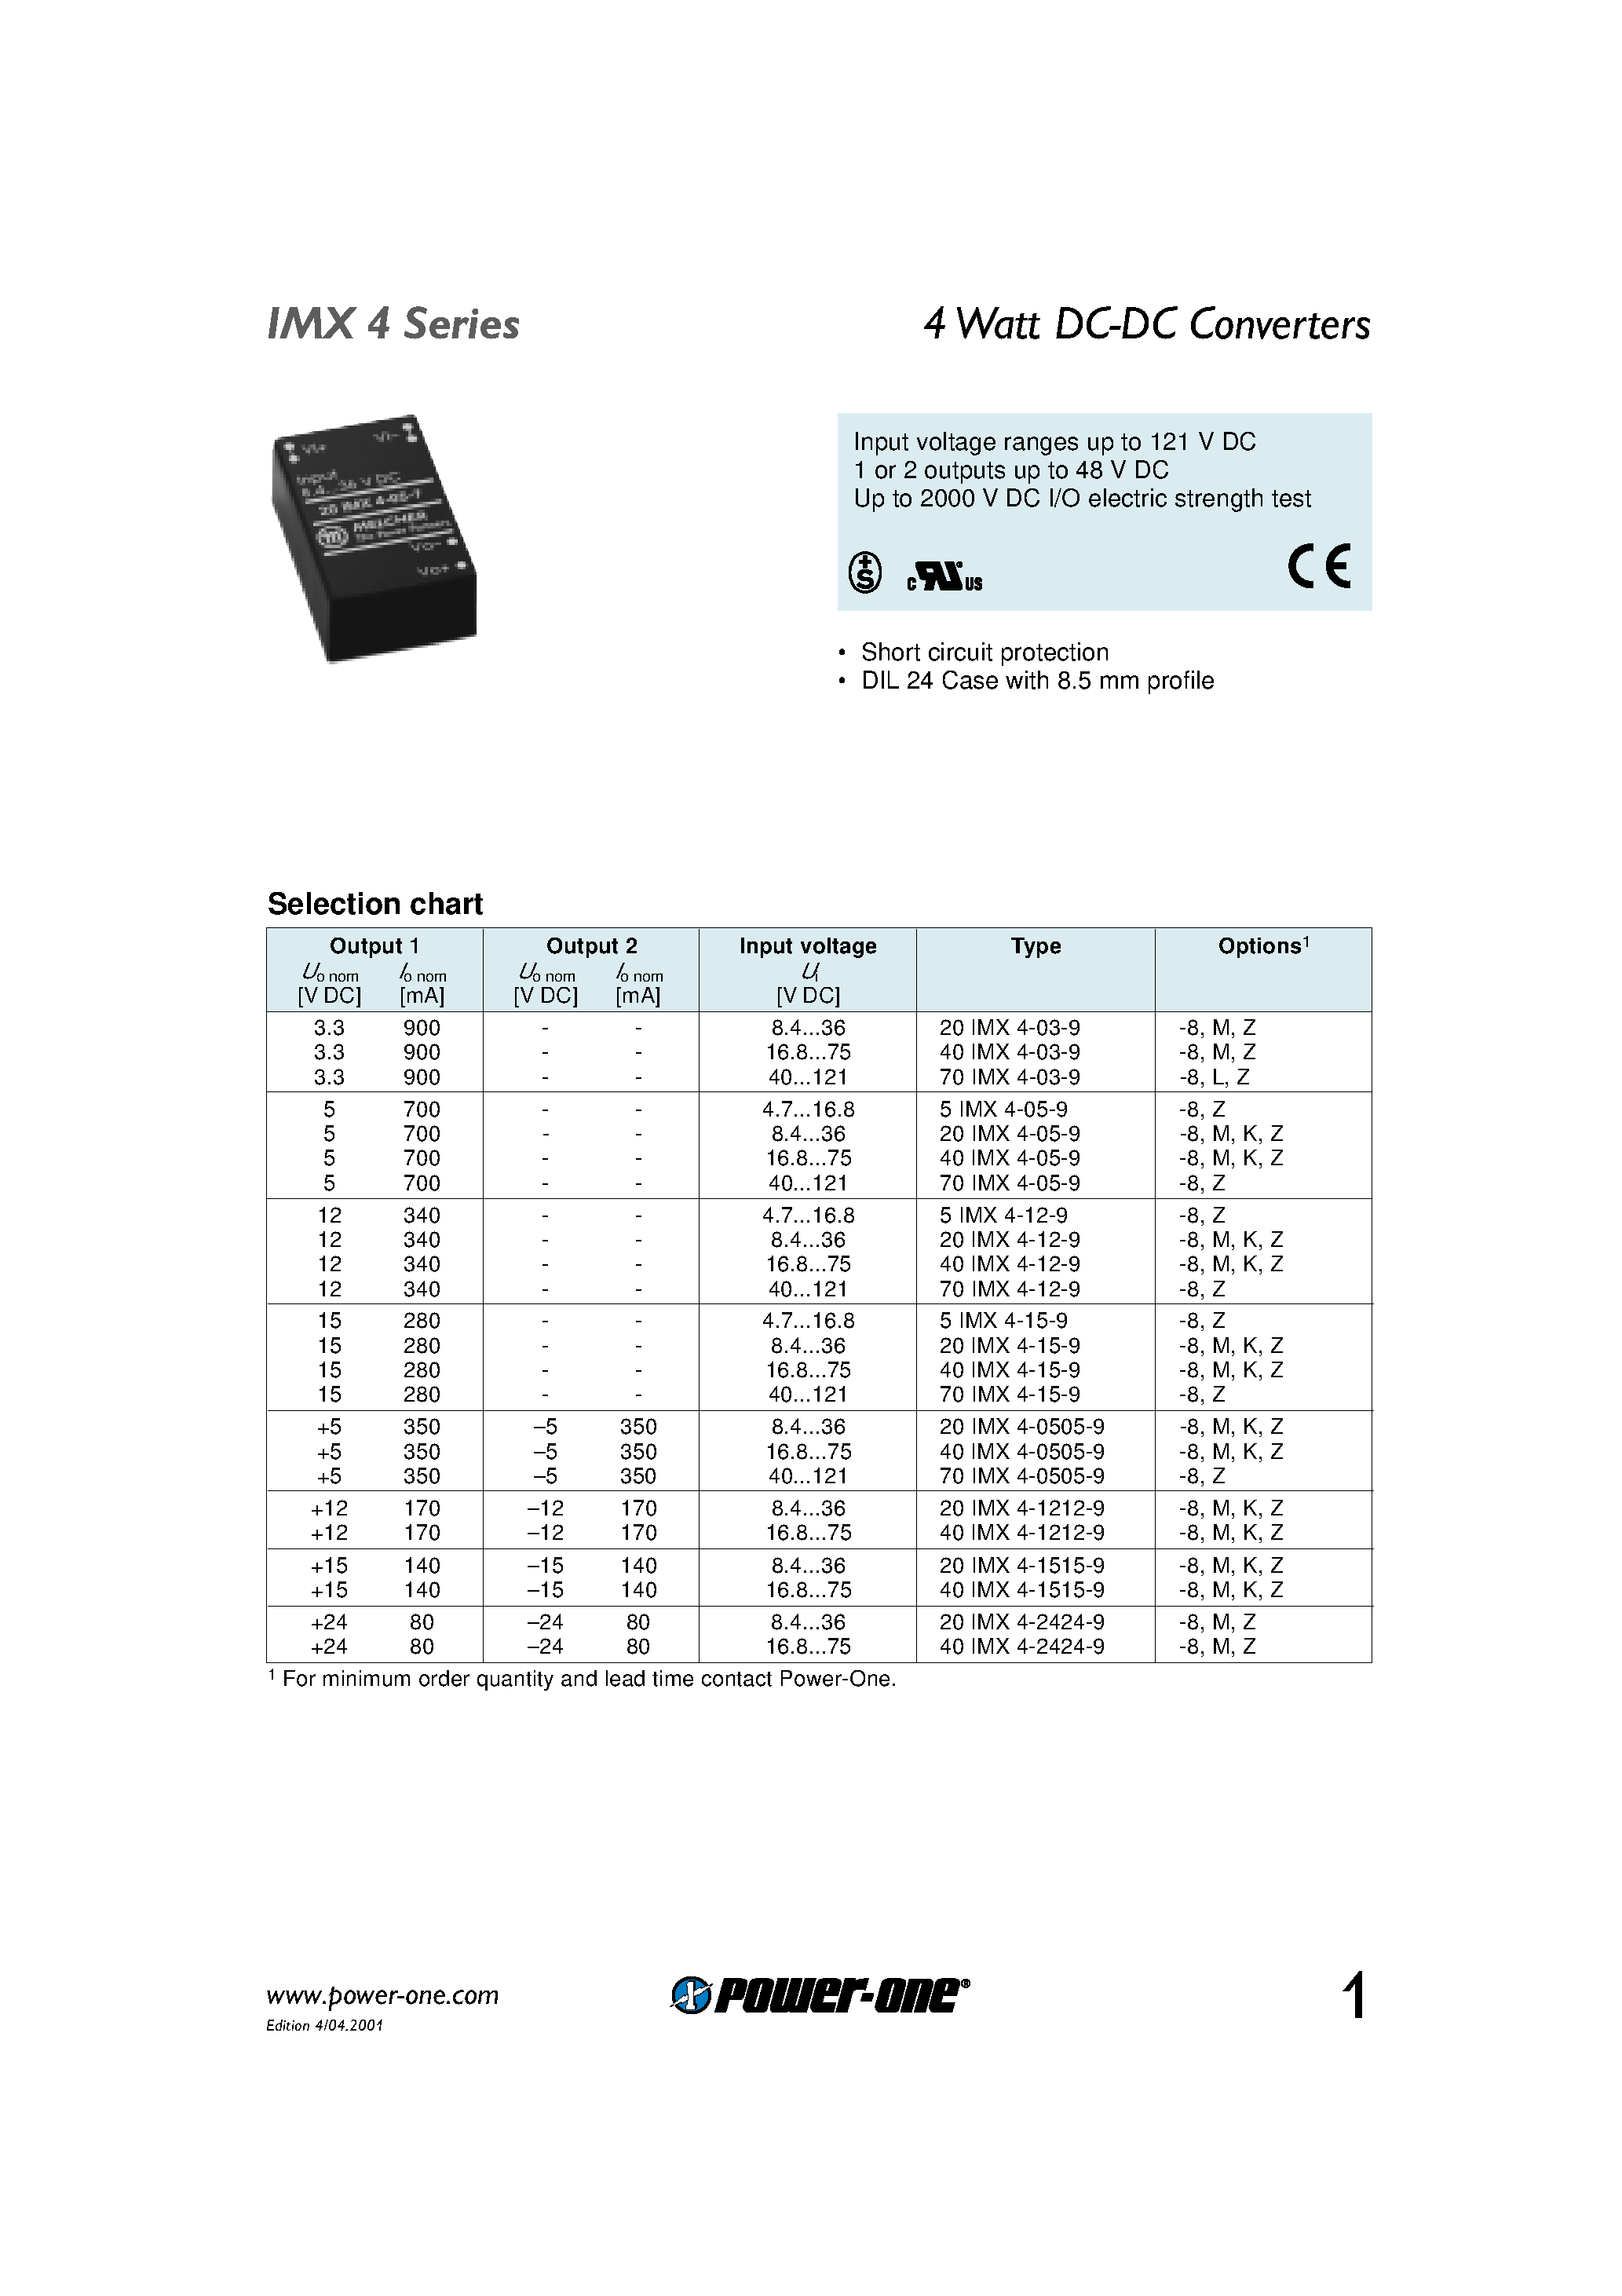 Datasheet 70IMX4-15-9 - 4 Watt DC-DC Converters page 1